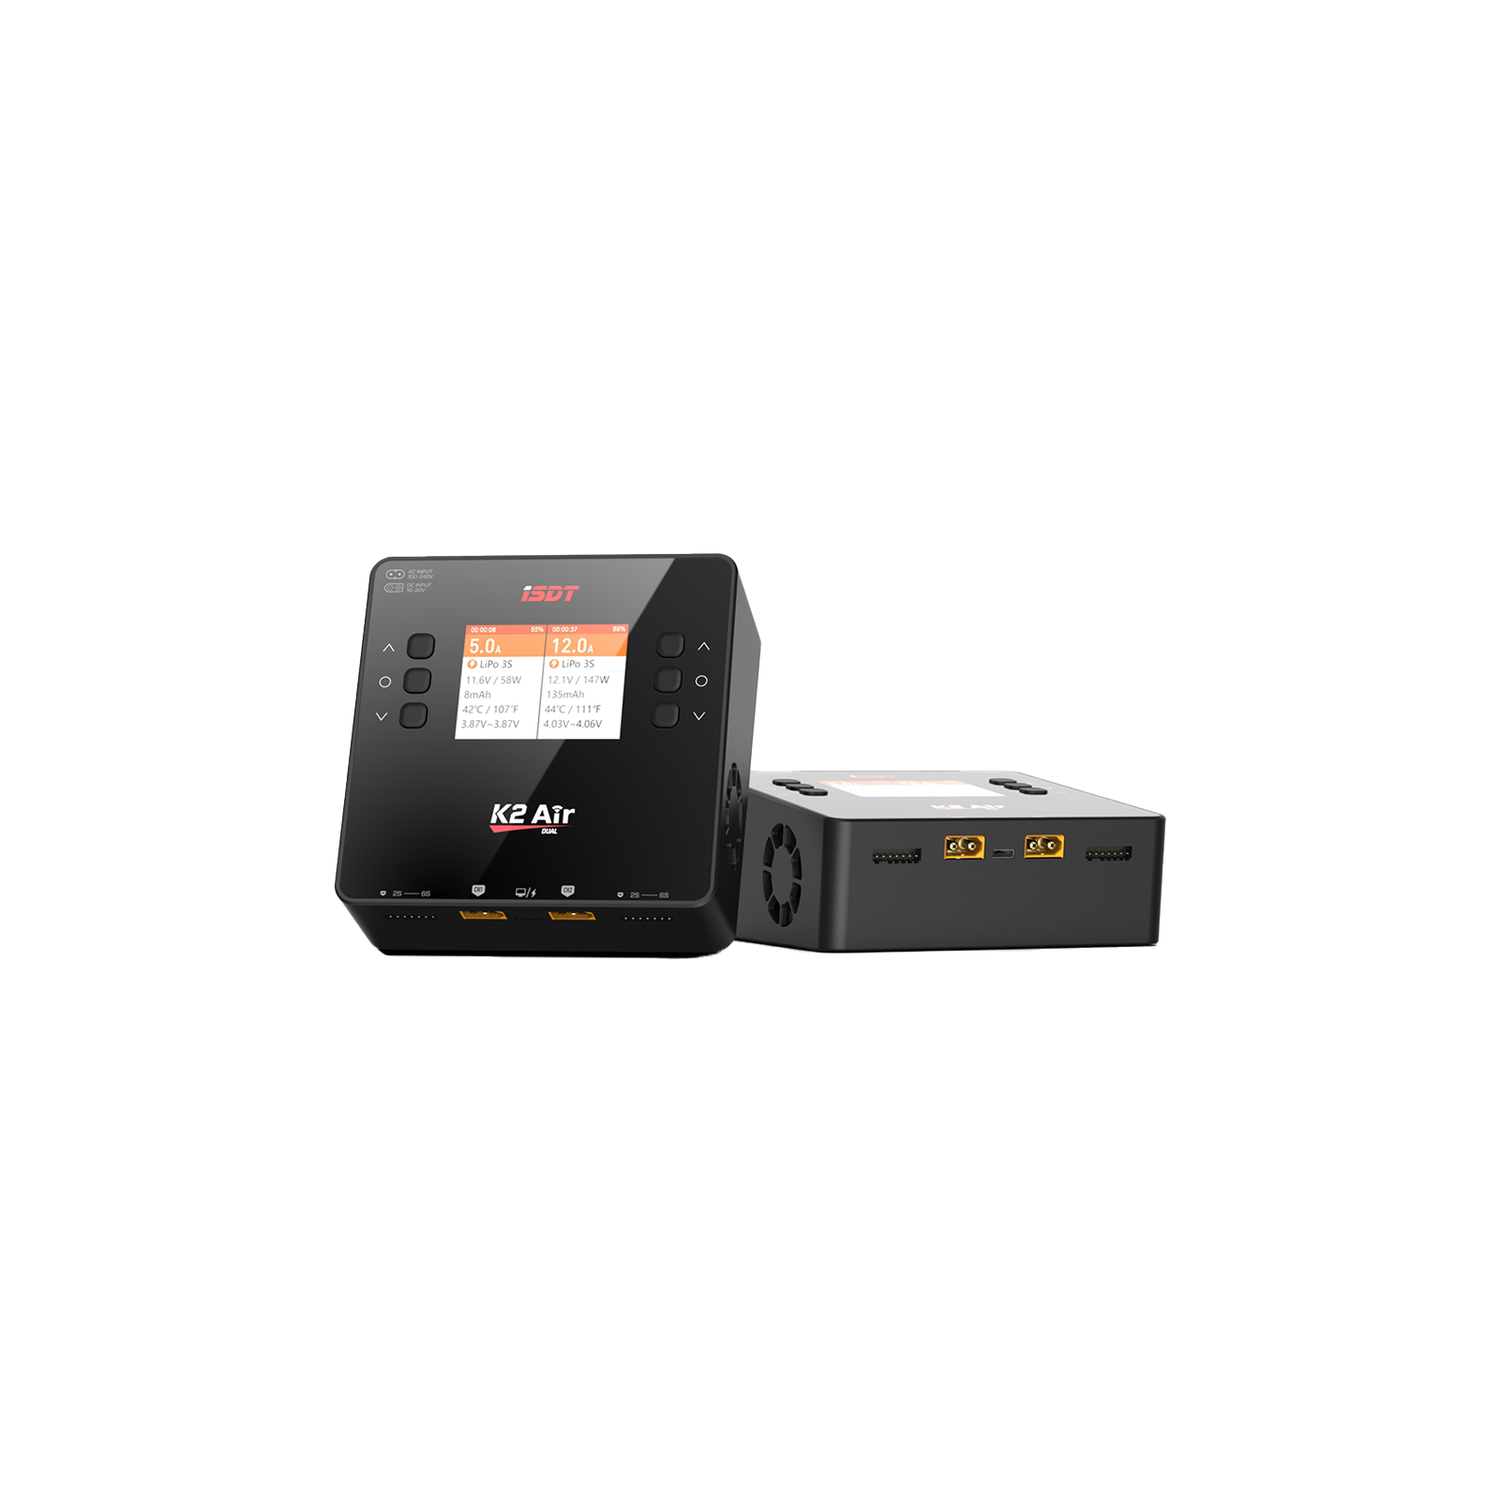 K2 Air Bluetooth Remote Control Lado Ladeger, AC / DC 200W / 500wx2 20a Smart Balance Disgerger